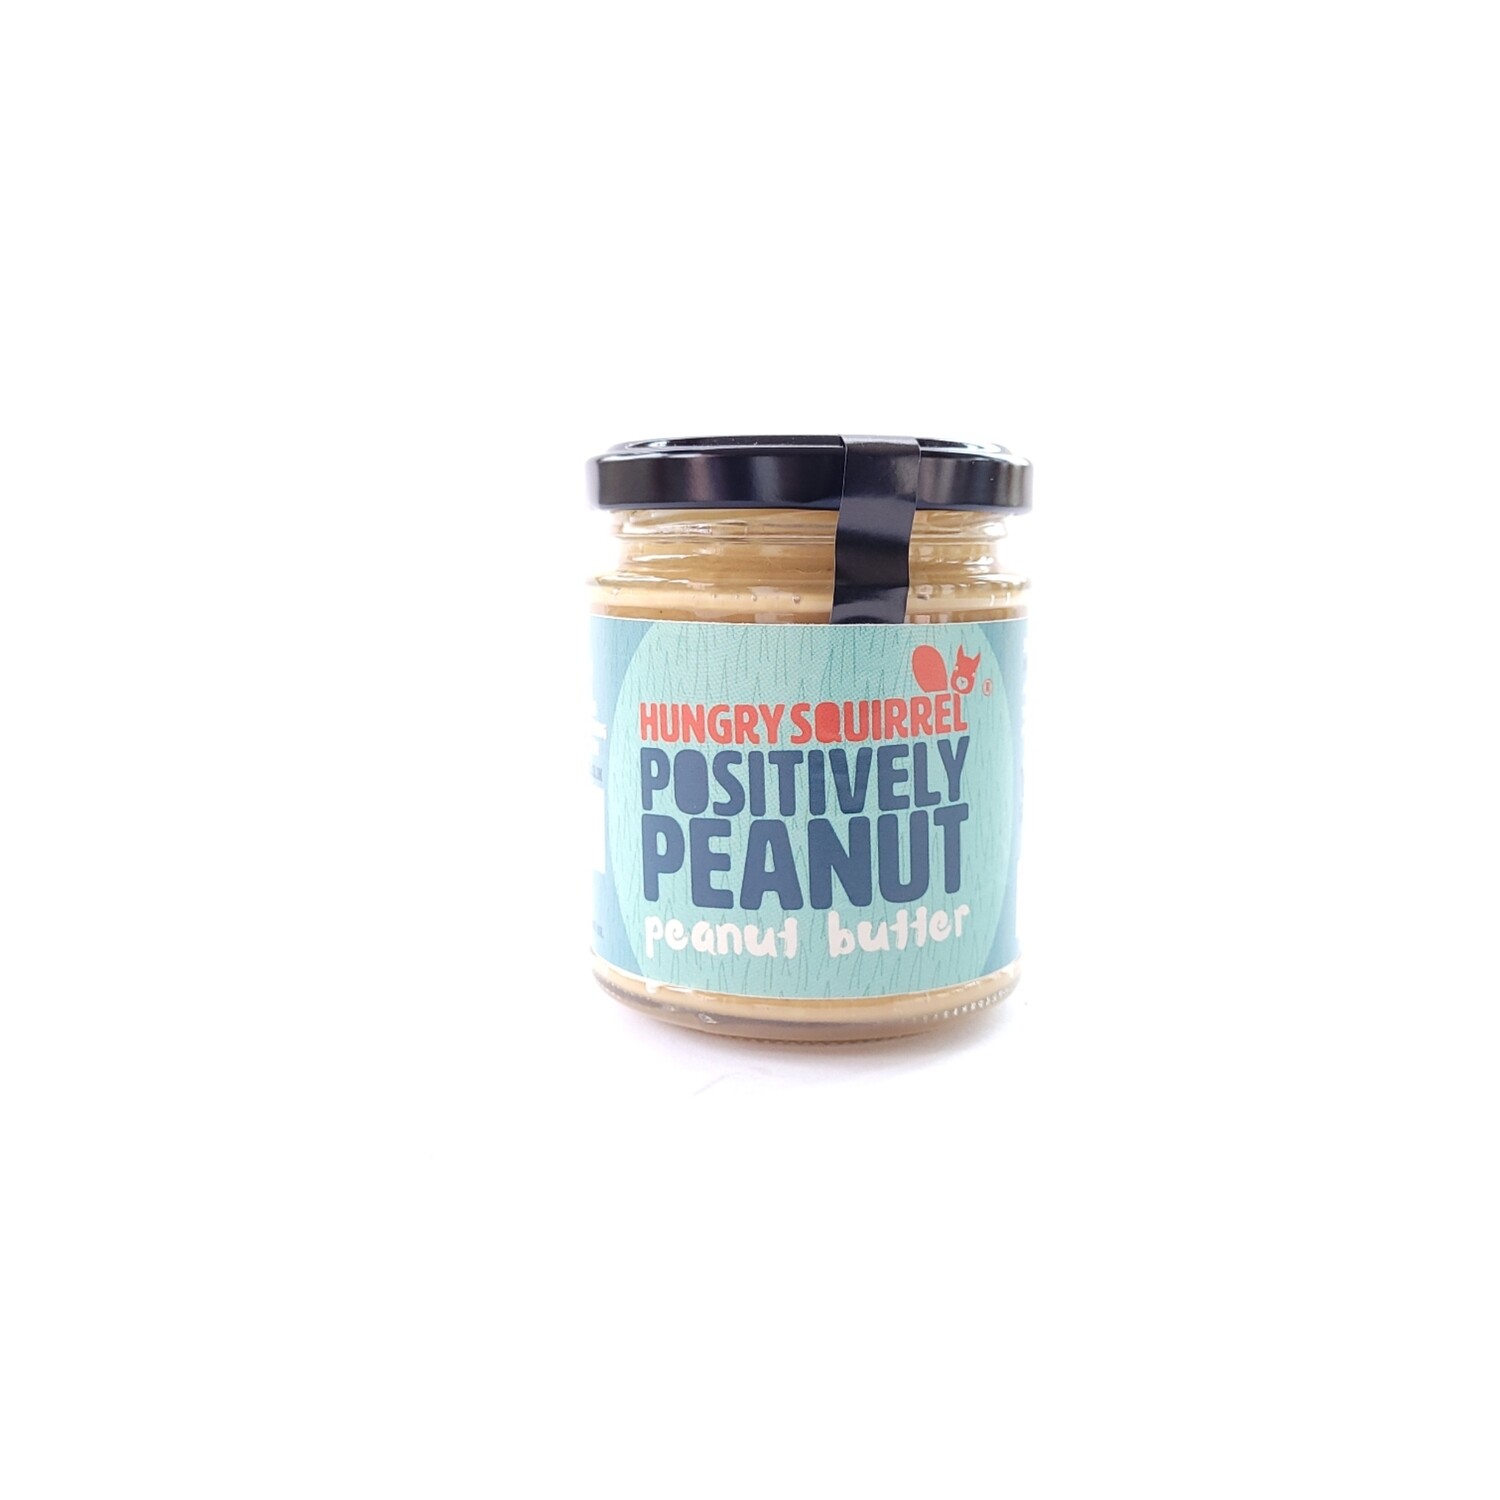 Positively Peanut butter 180g